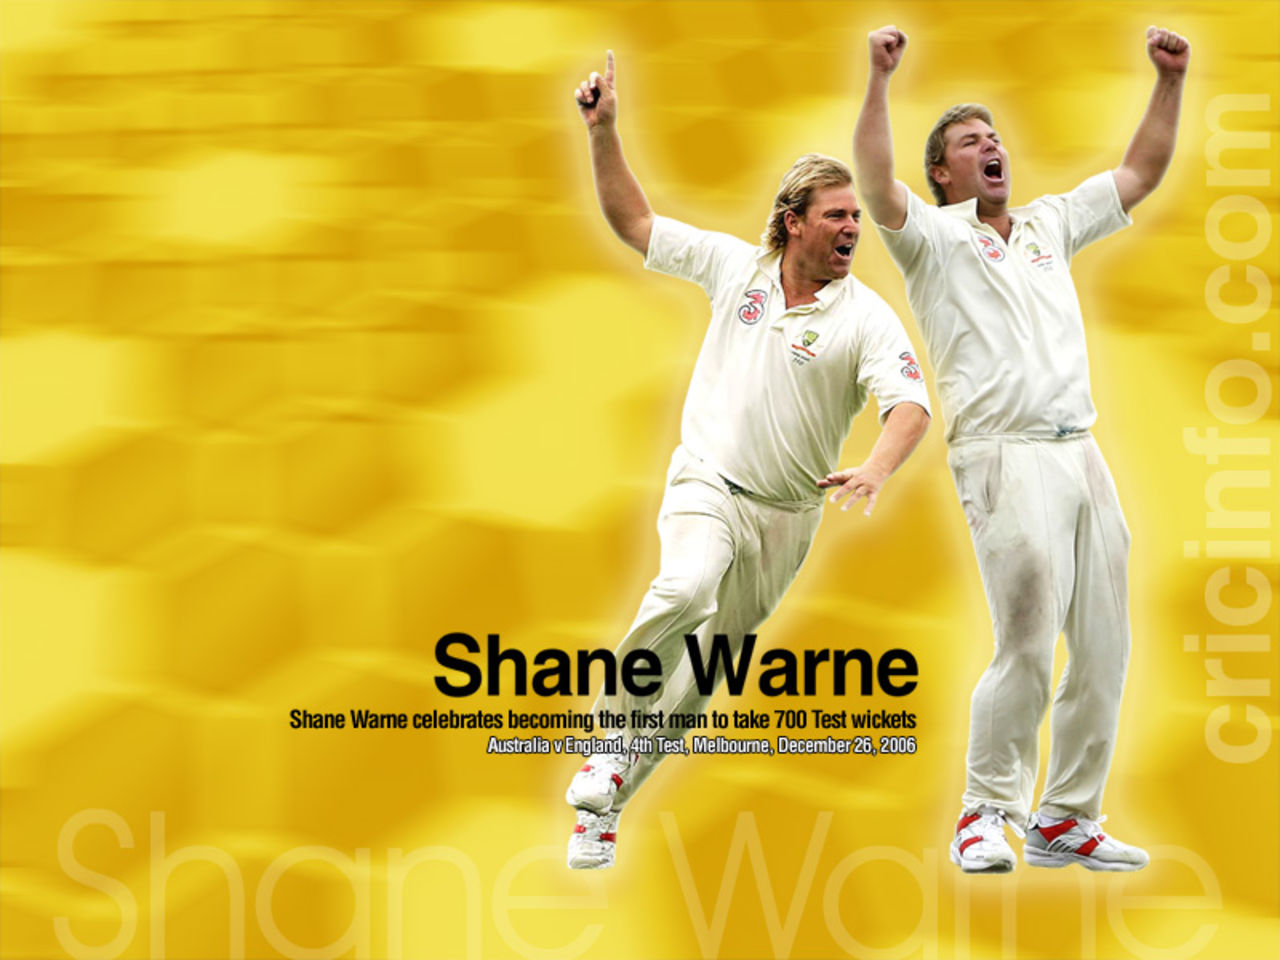 Shane Warne